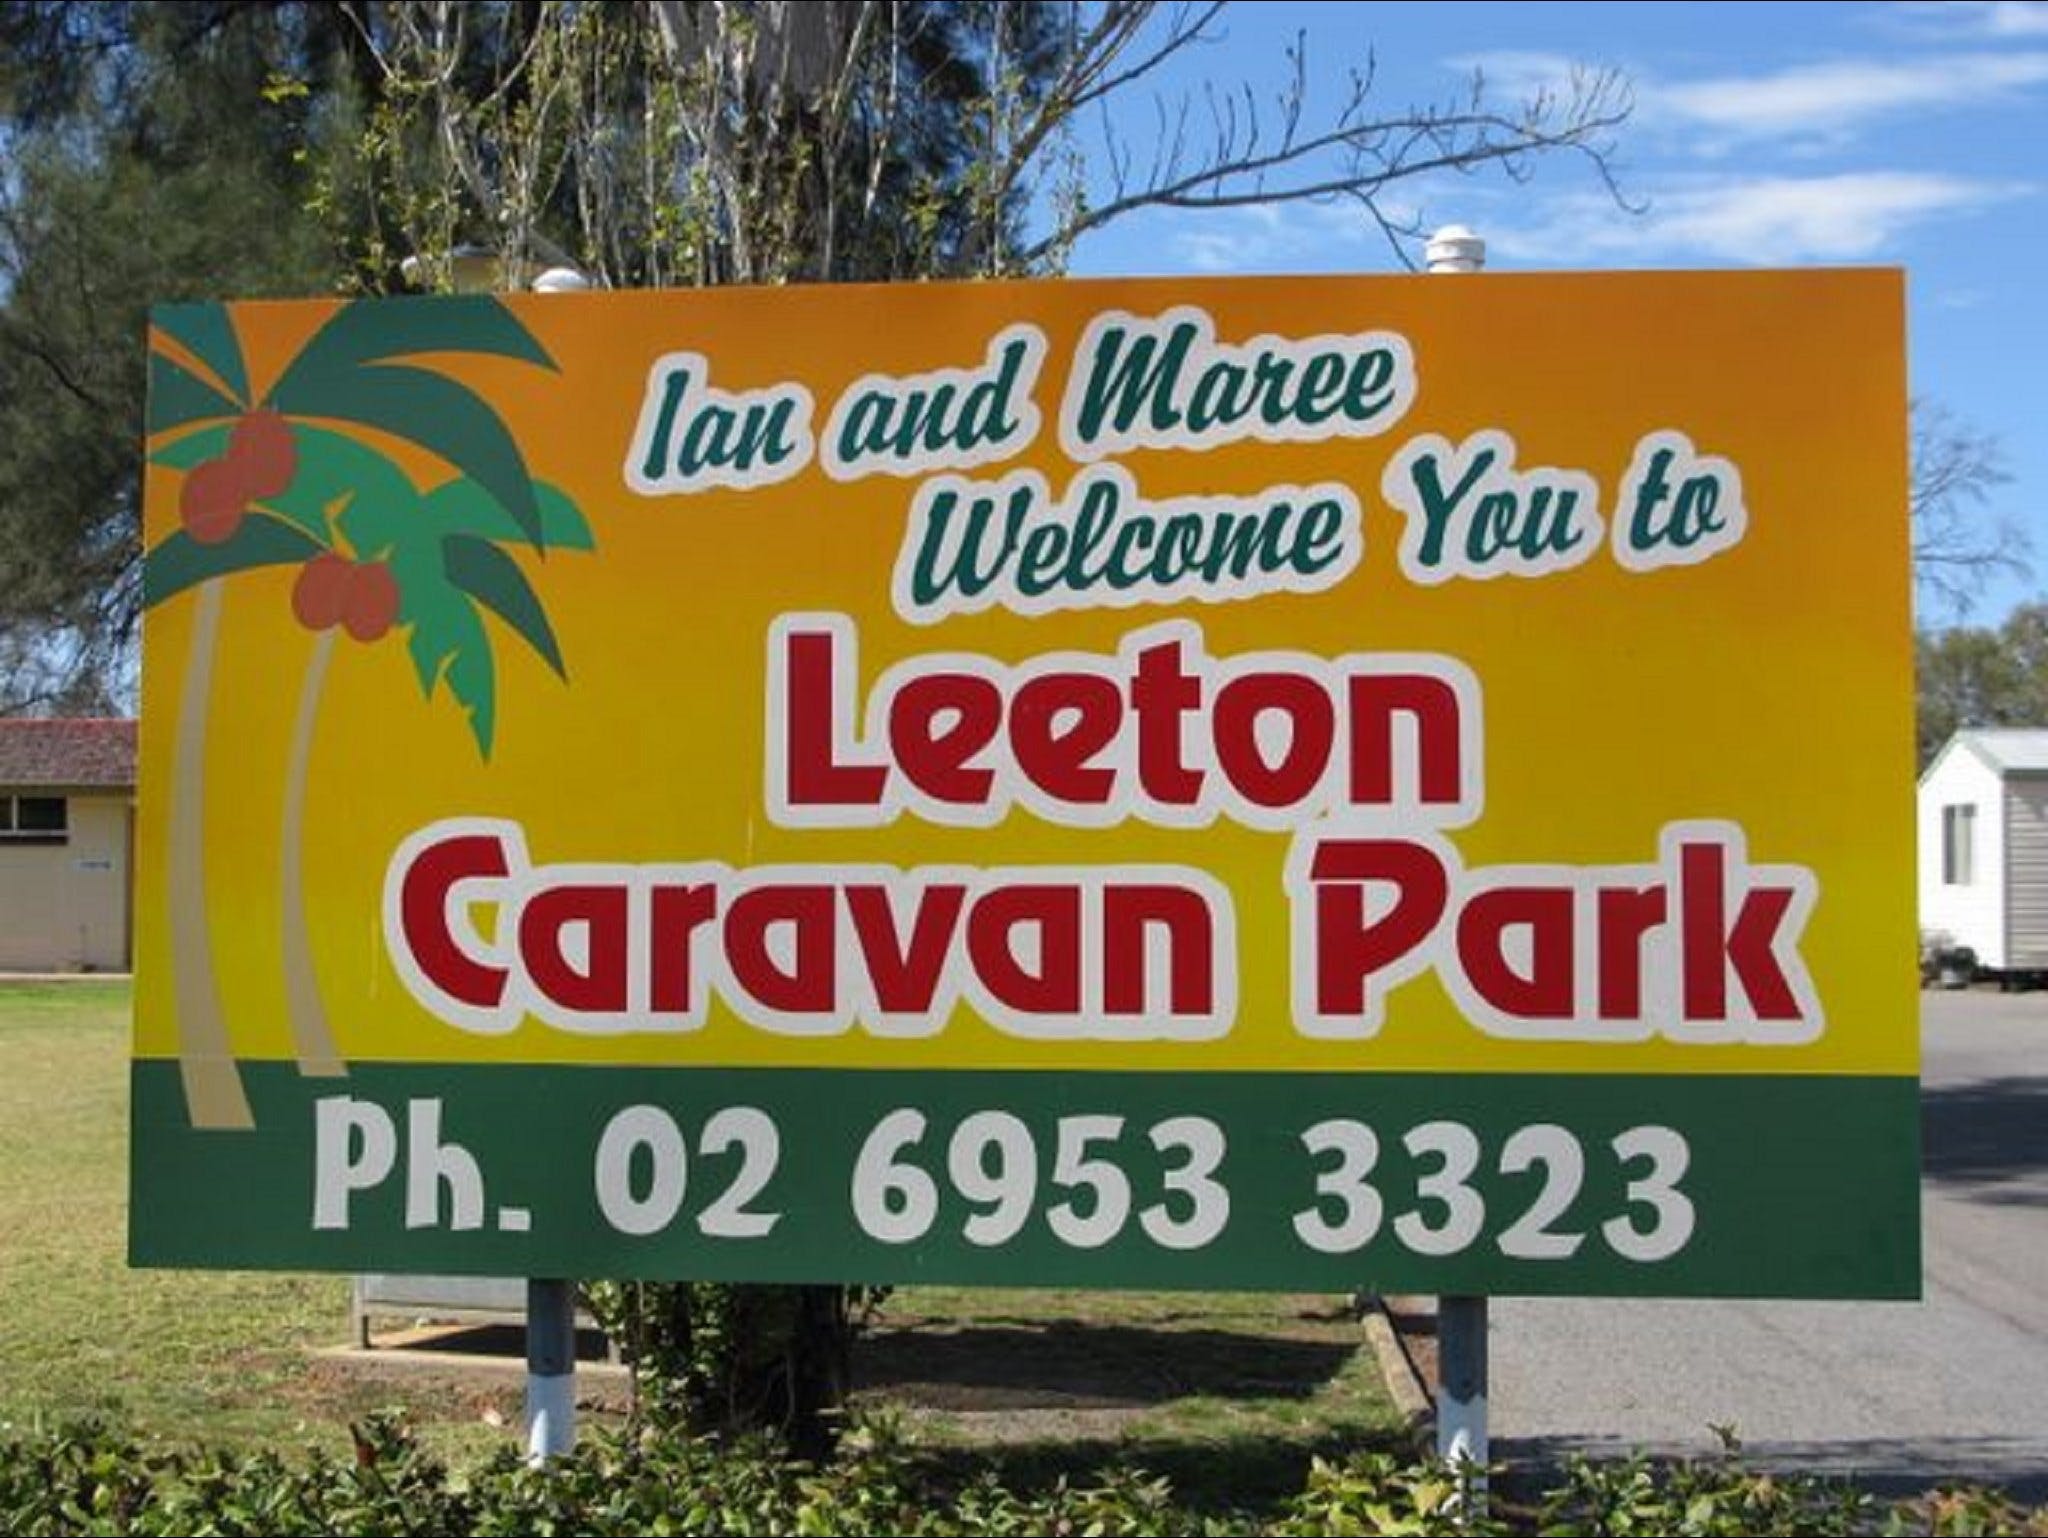 Leeton Caravan Park - Coogee Beach Accommodation